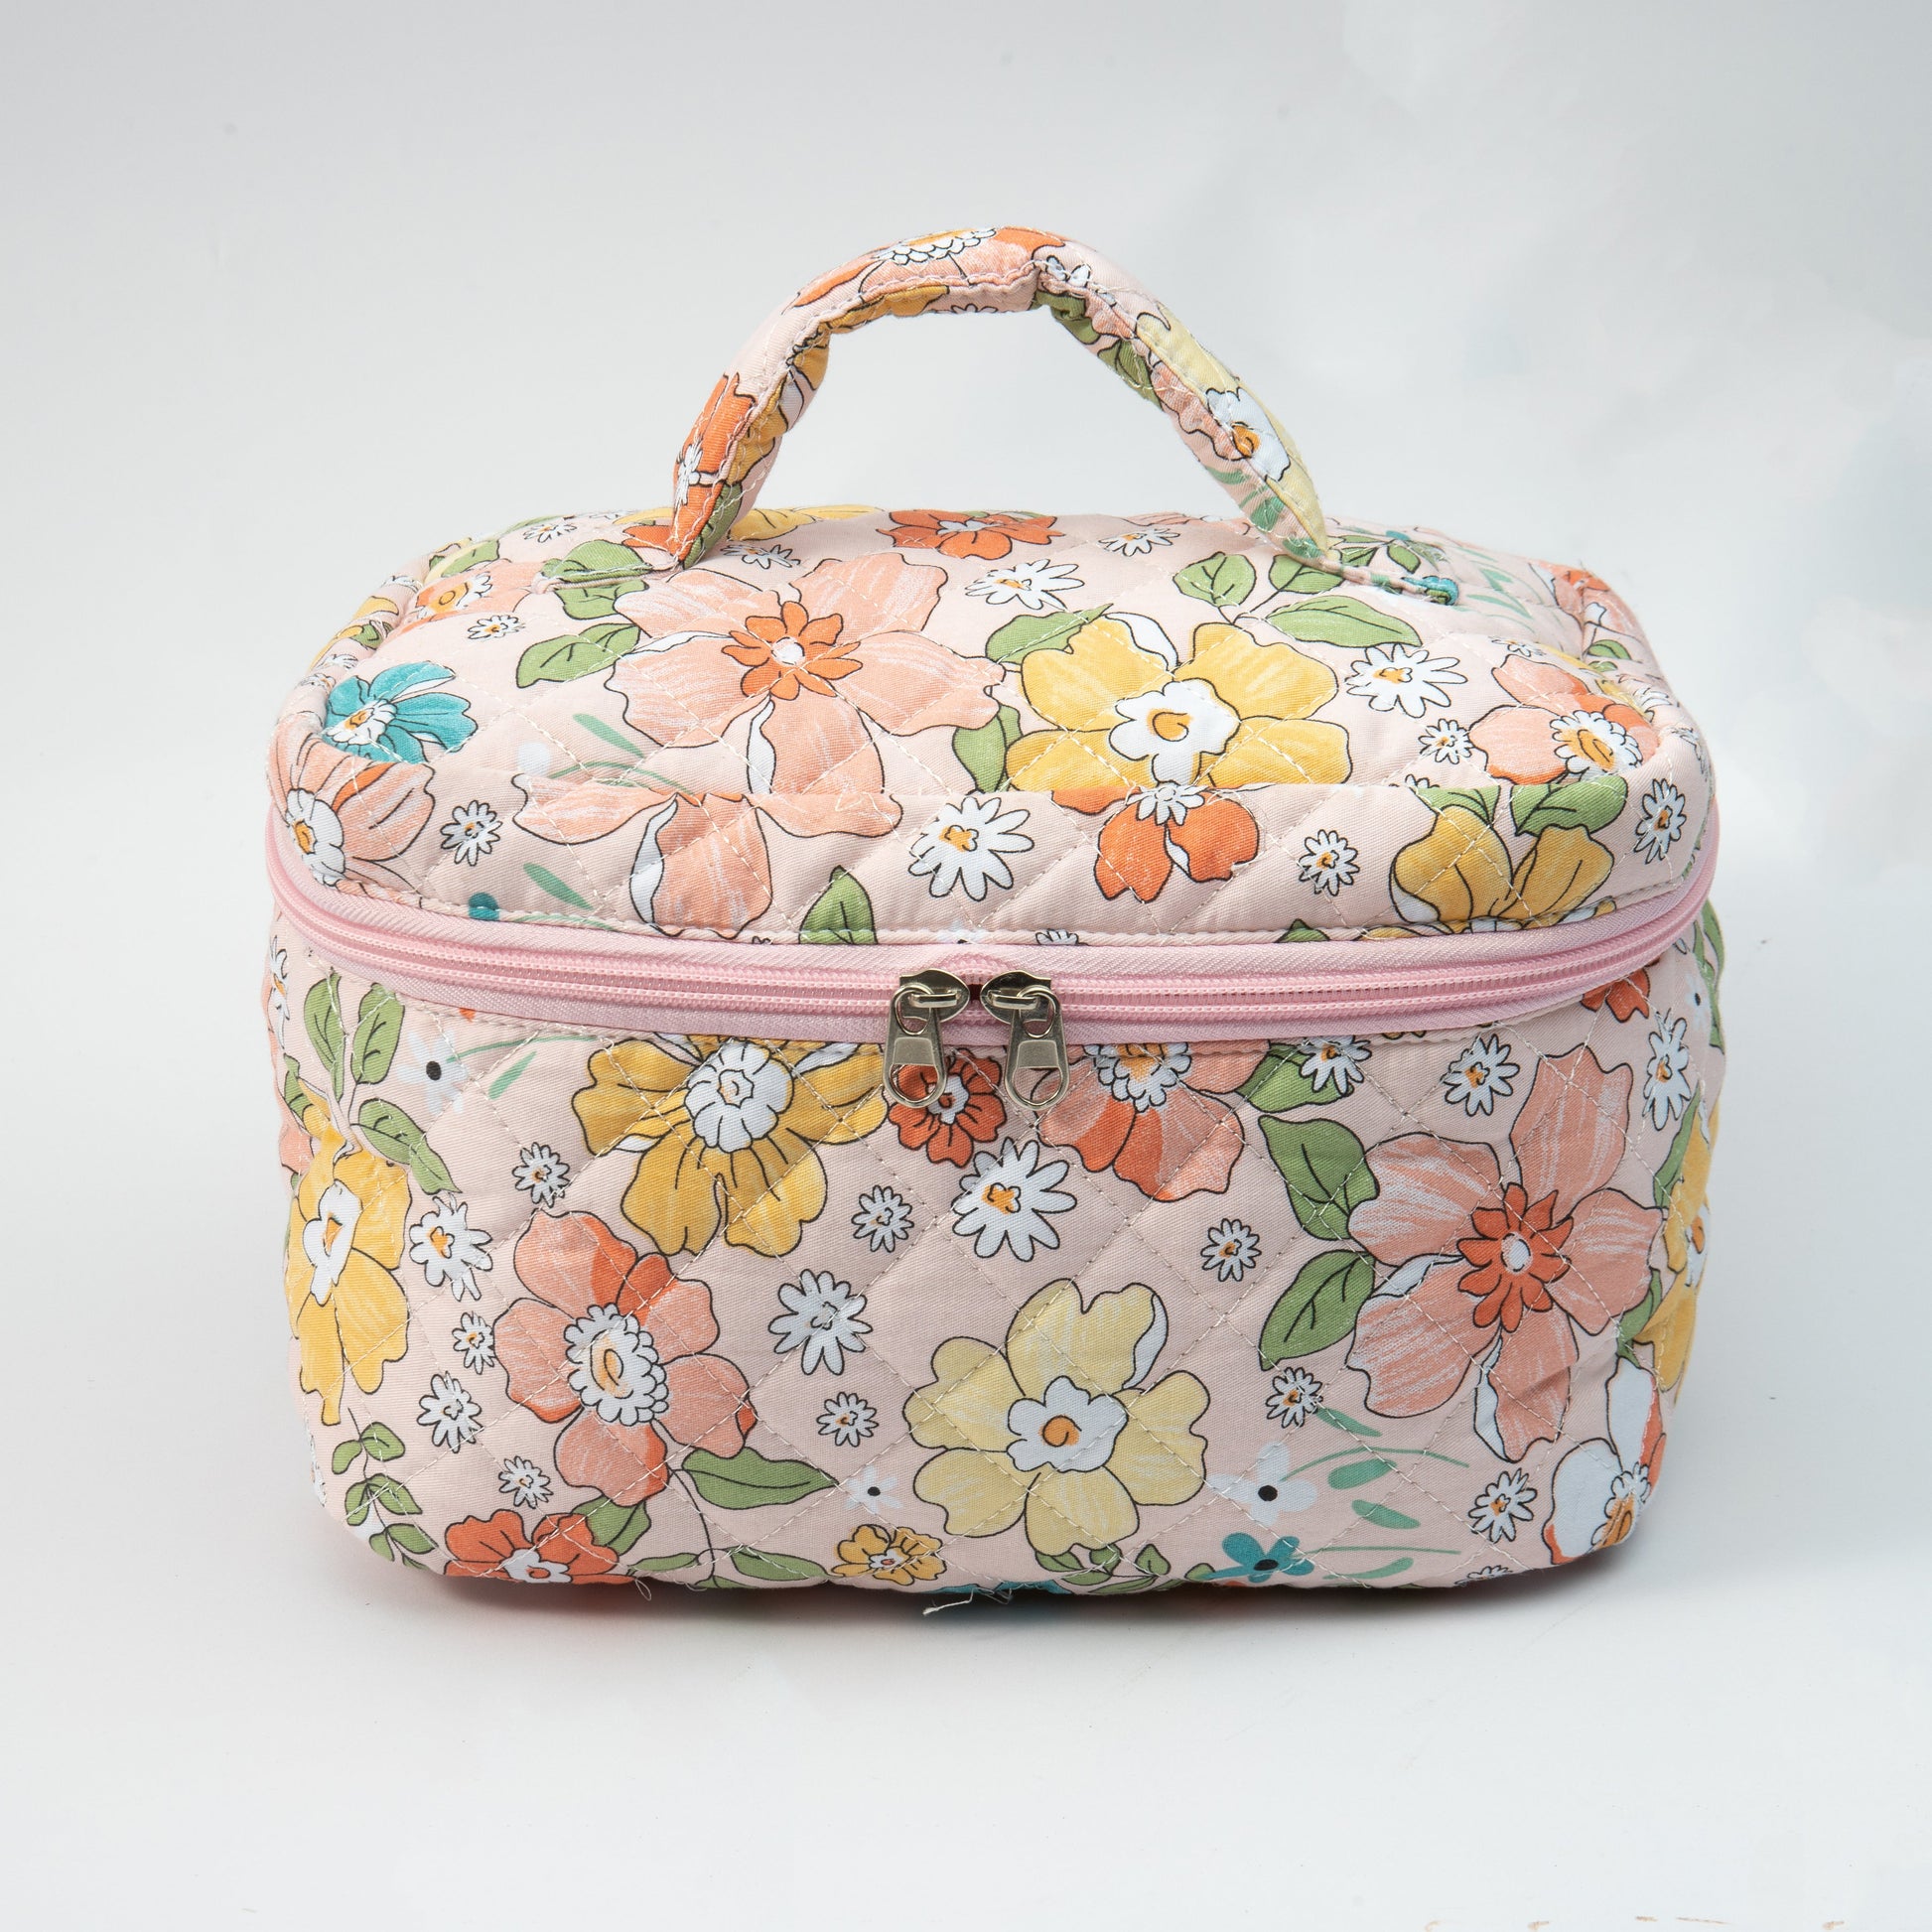 Vintage Floral Makeup Bag, Boho Quilted Cotton Cosmetic Bag, Block